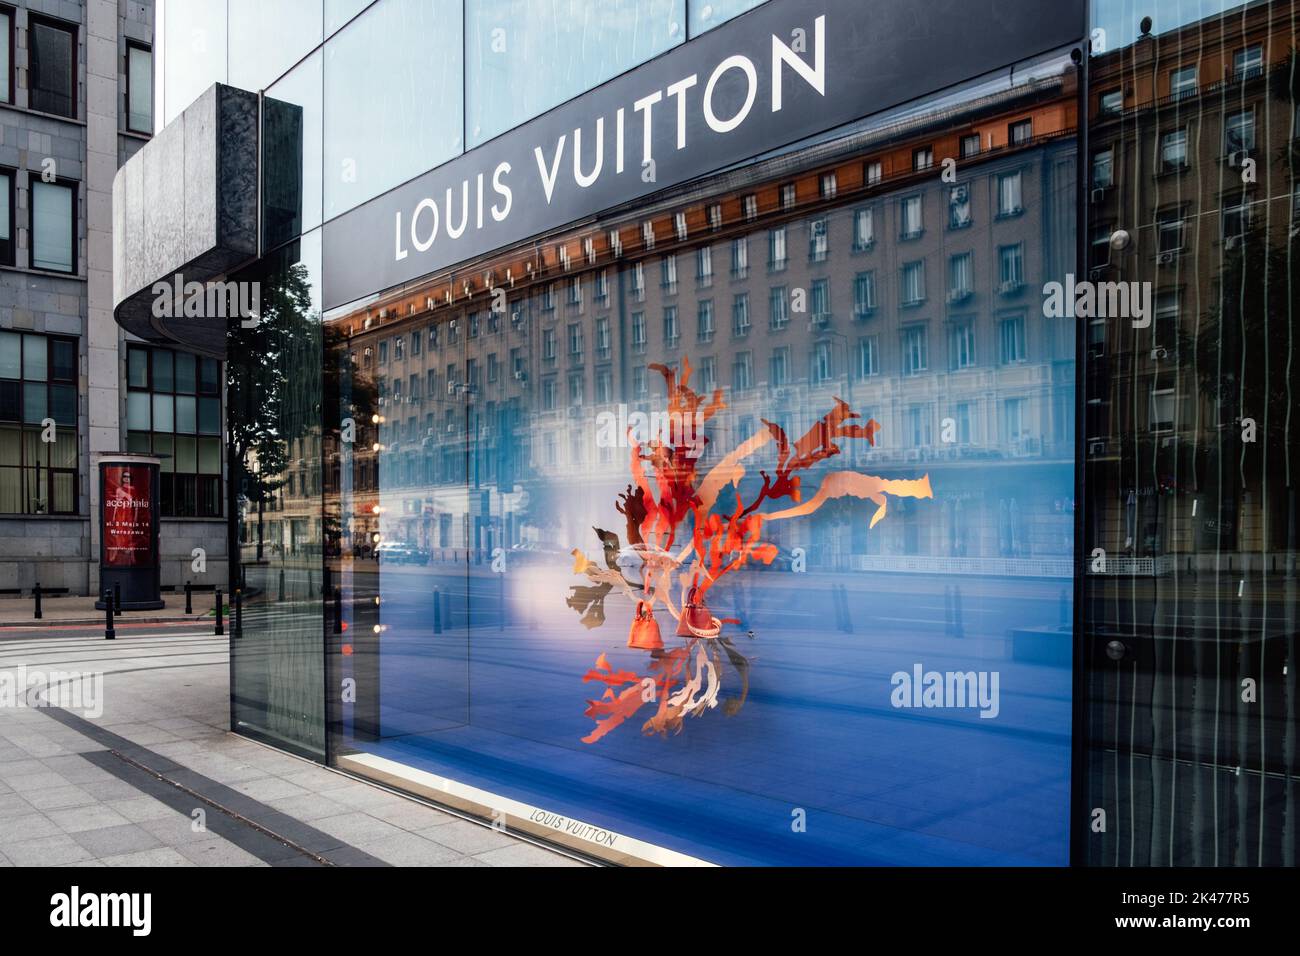 Warshaw Polen Maj 2022 Facade Louis Vuitton Modebutik — Stock-foto ©  NewAfrica #590120566